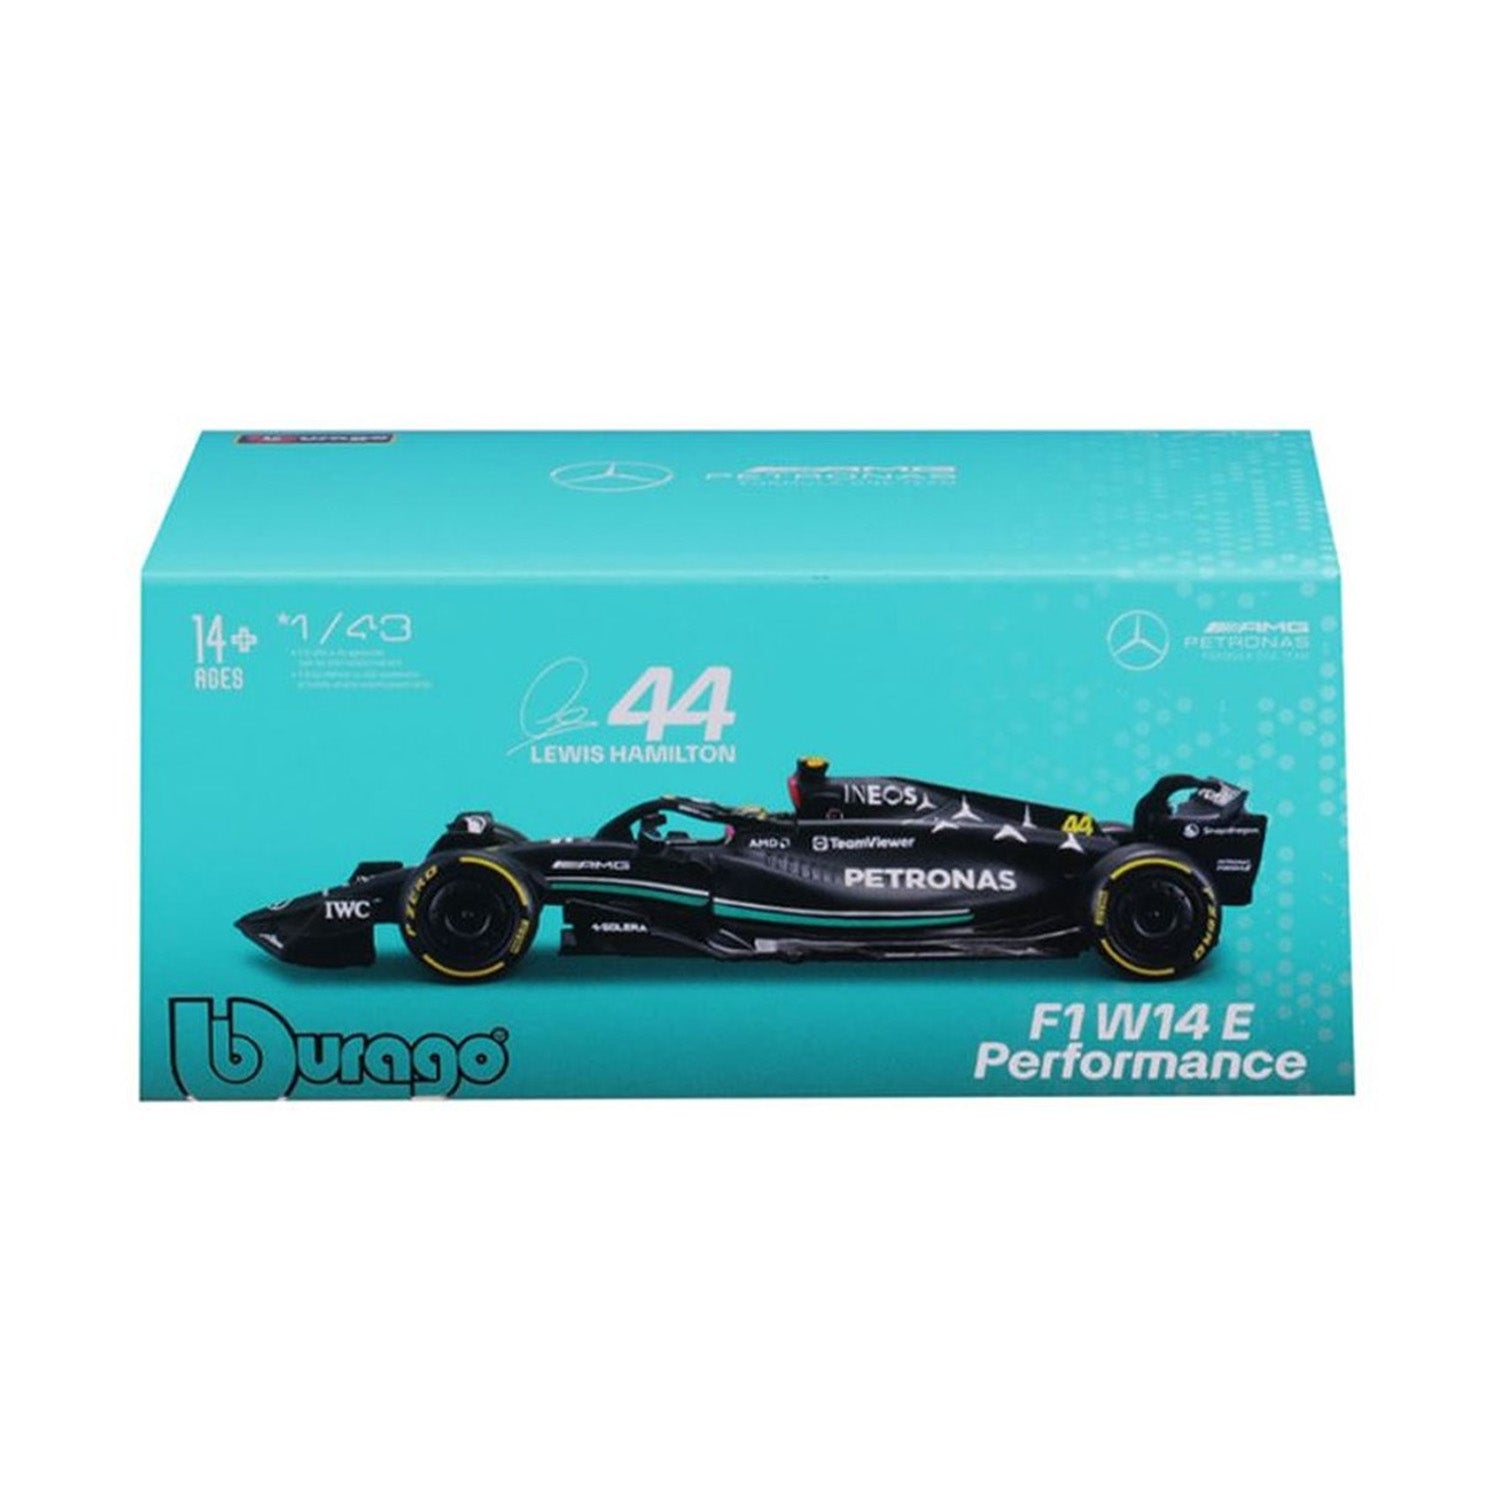 W14 #44 Lewis Hamilton Car Model 1:43 - Mercedes-AMG Petronas - Fueler store